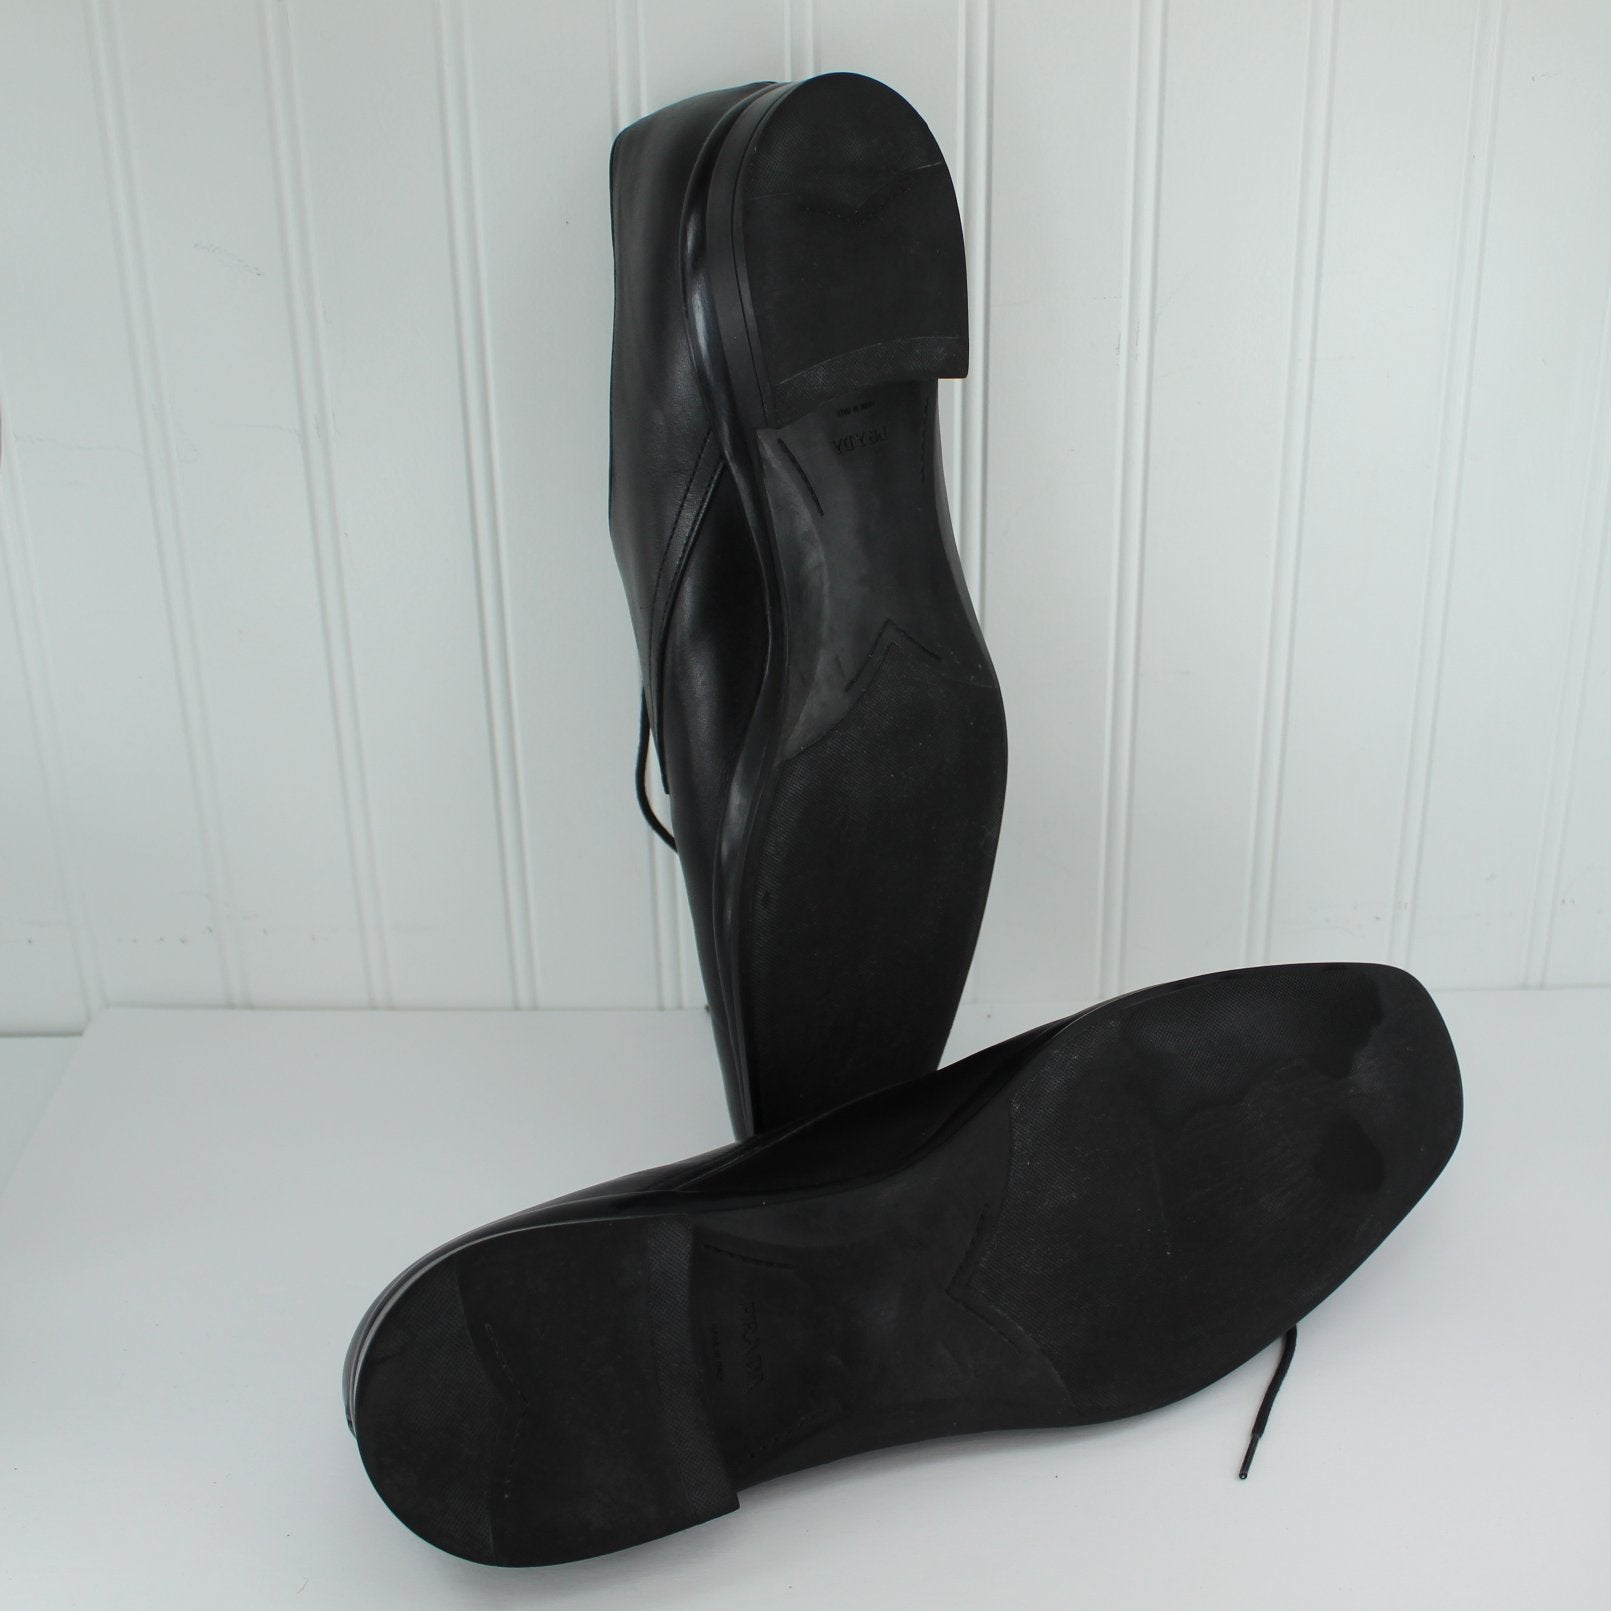 Prada Mens Black Leather Dress Shoes 10 1/2 Smooth Square Toe Elegant no odors glaring flaws